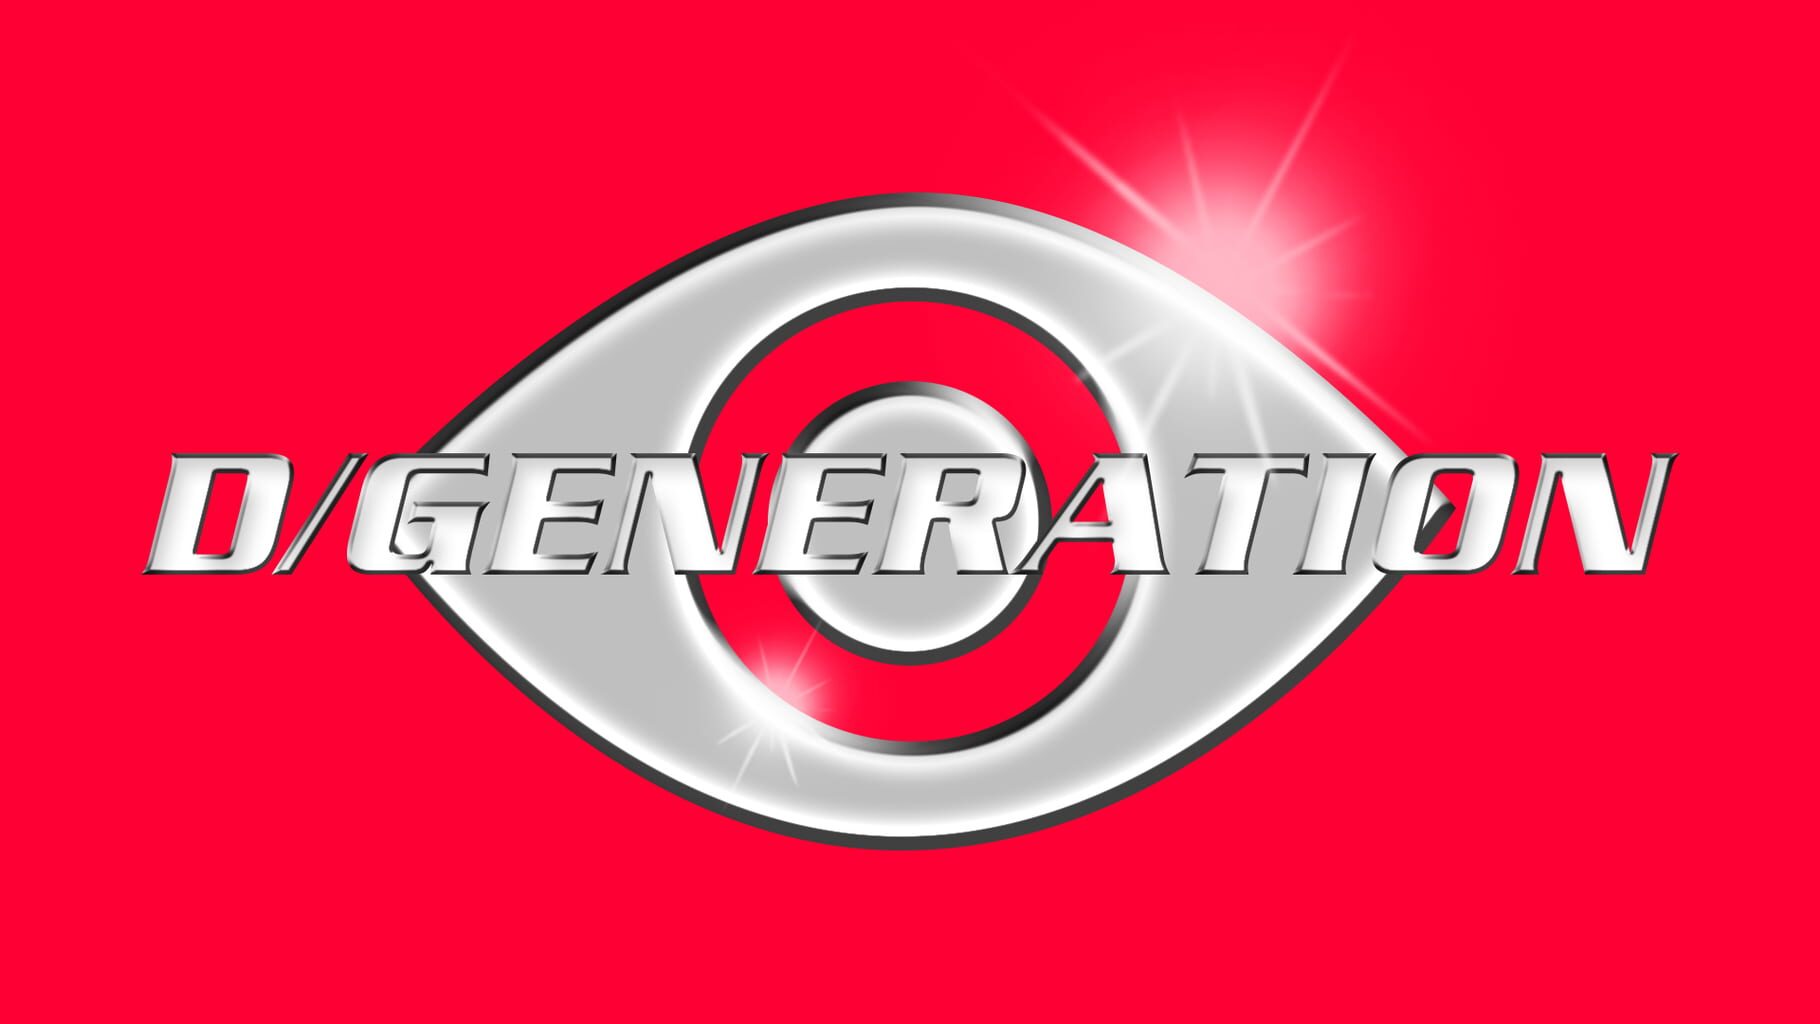 D/Generation HD artwork